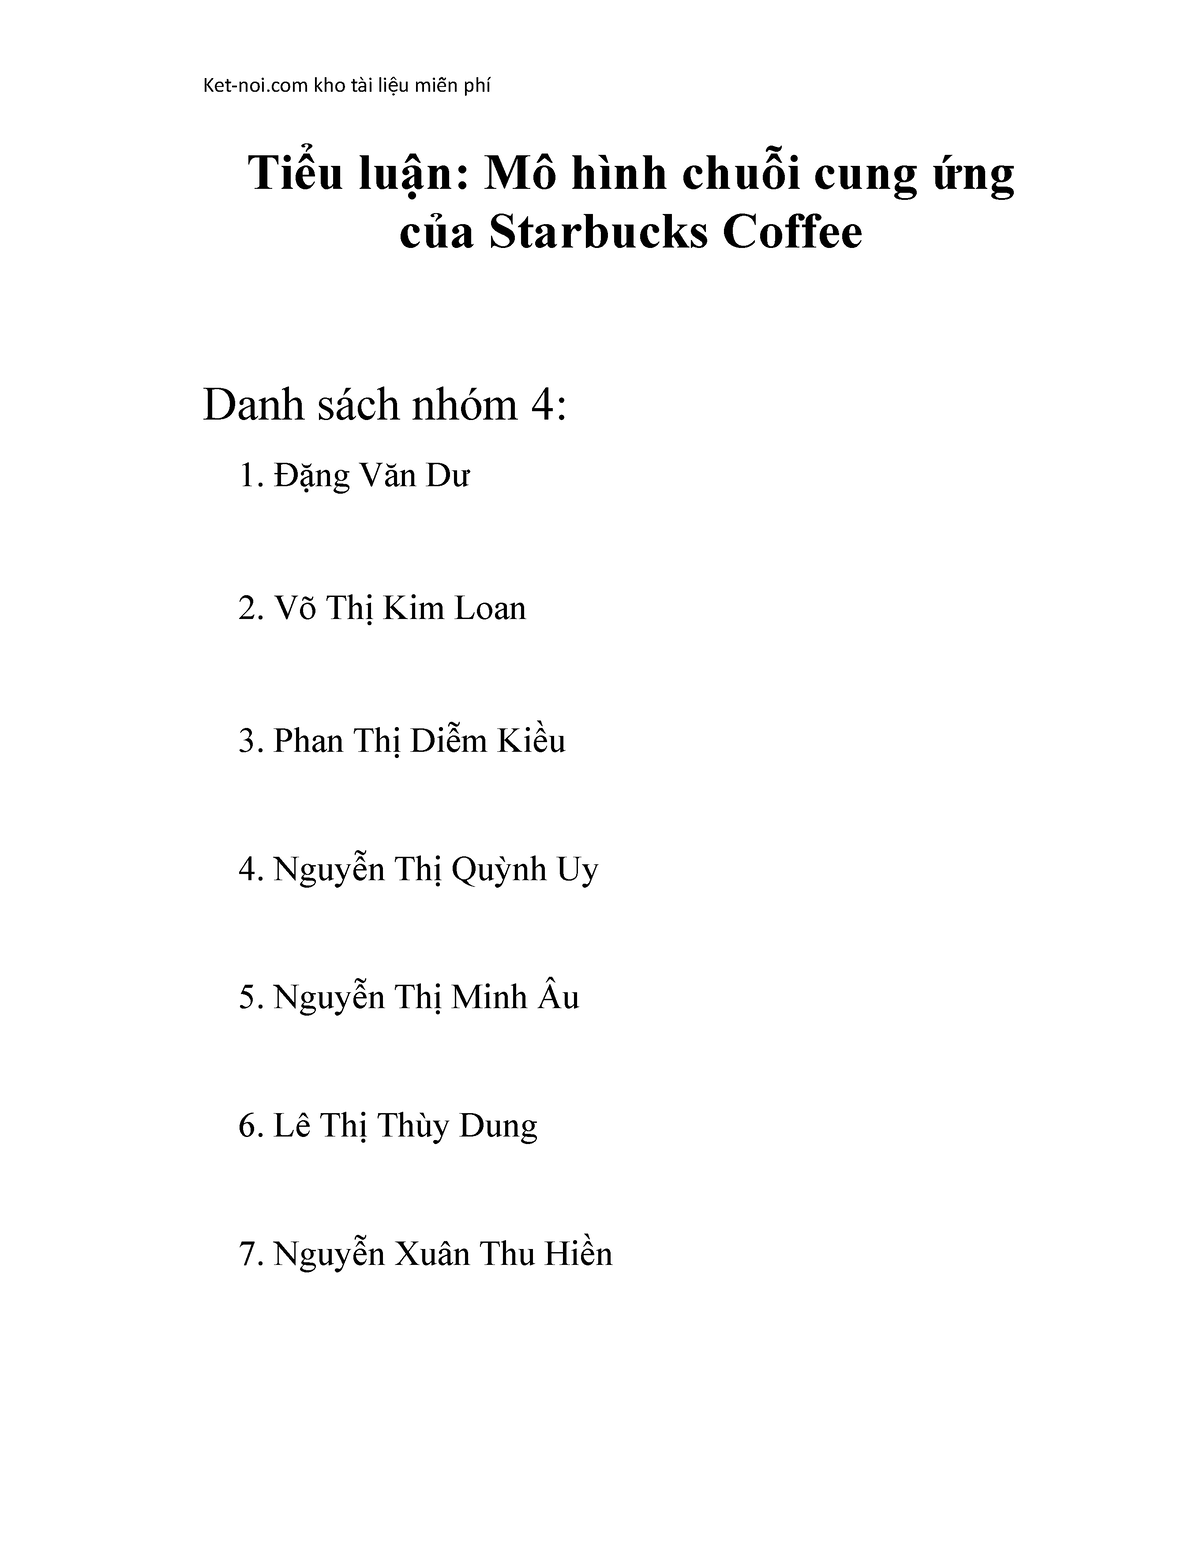 Starbucks  Wikipedia tiếng Việt